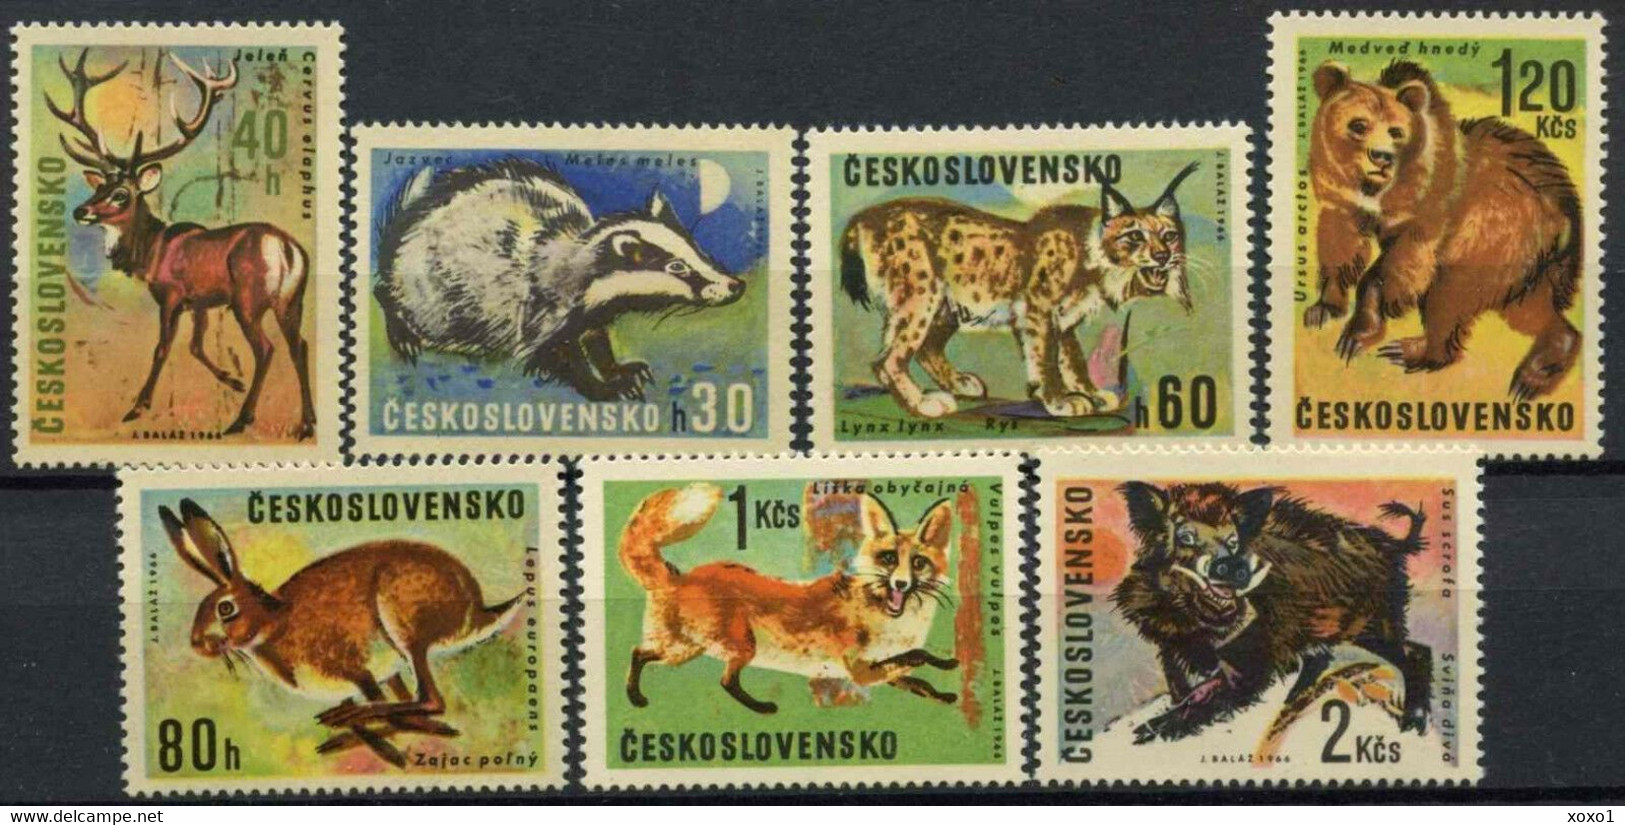 Czechoslovakia 1966 MiNr. 1661 - 1667  Tschechoslowakei  Animals 7v    MNH ** 9,00 € - Ours